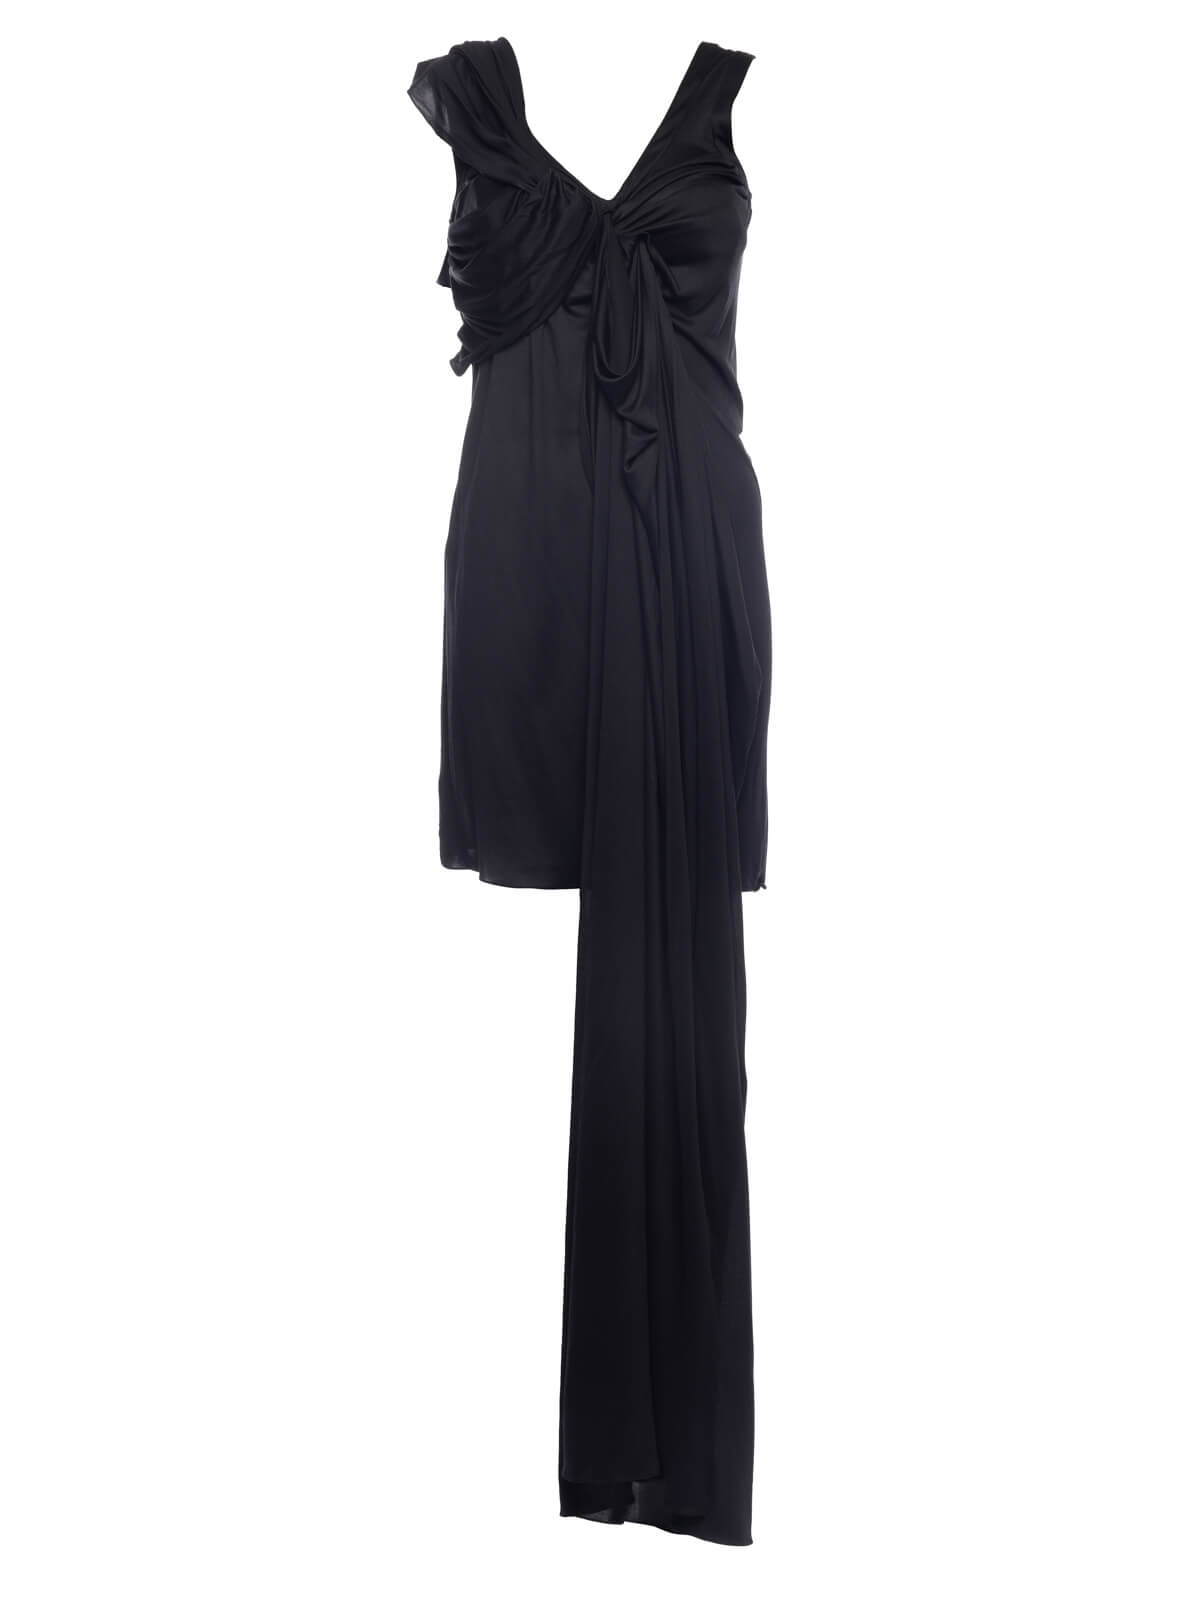 Christian Dior Corset Asymmetric Dress, UK 10, Vintage, silk